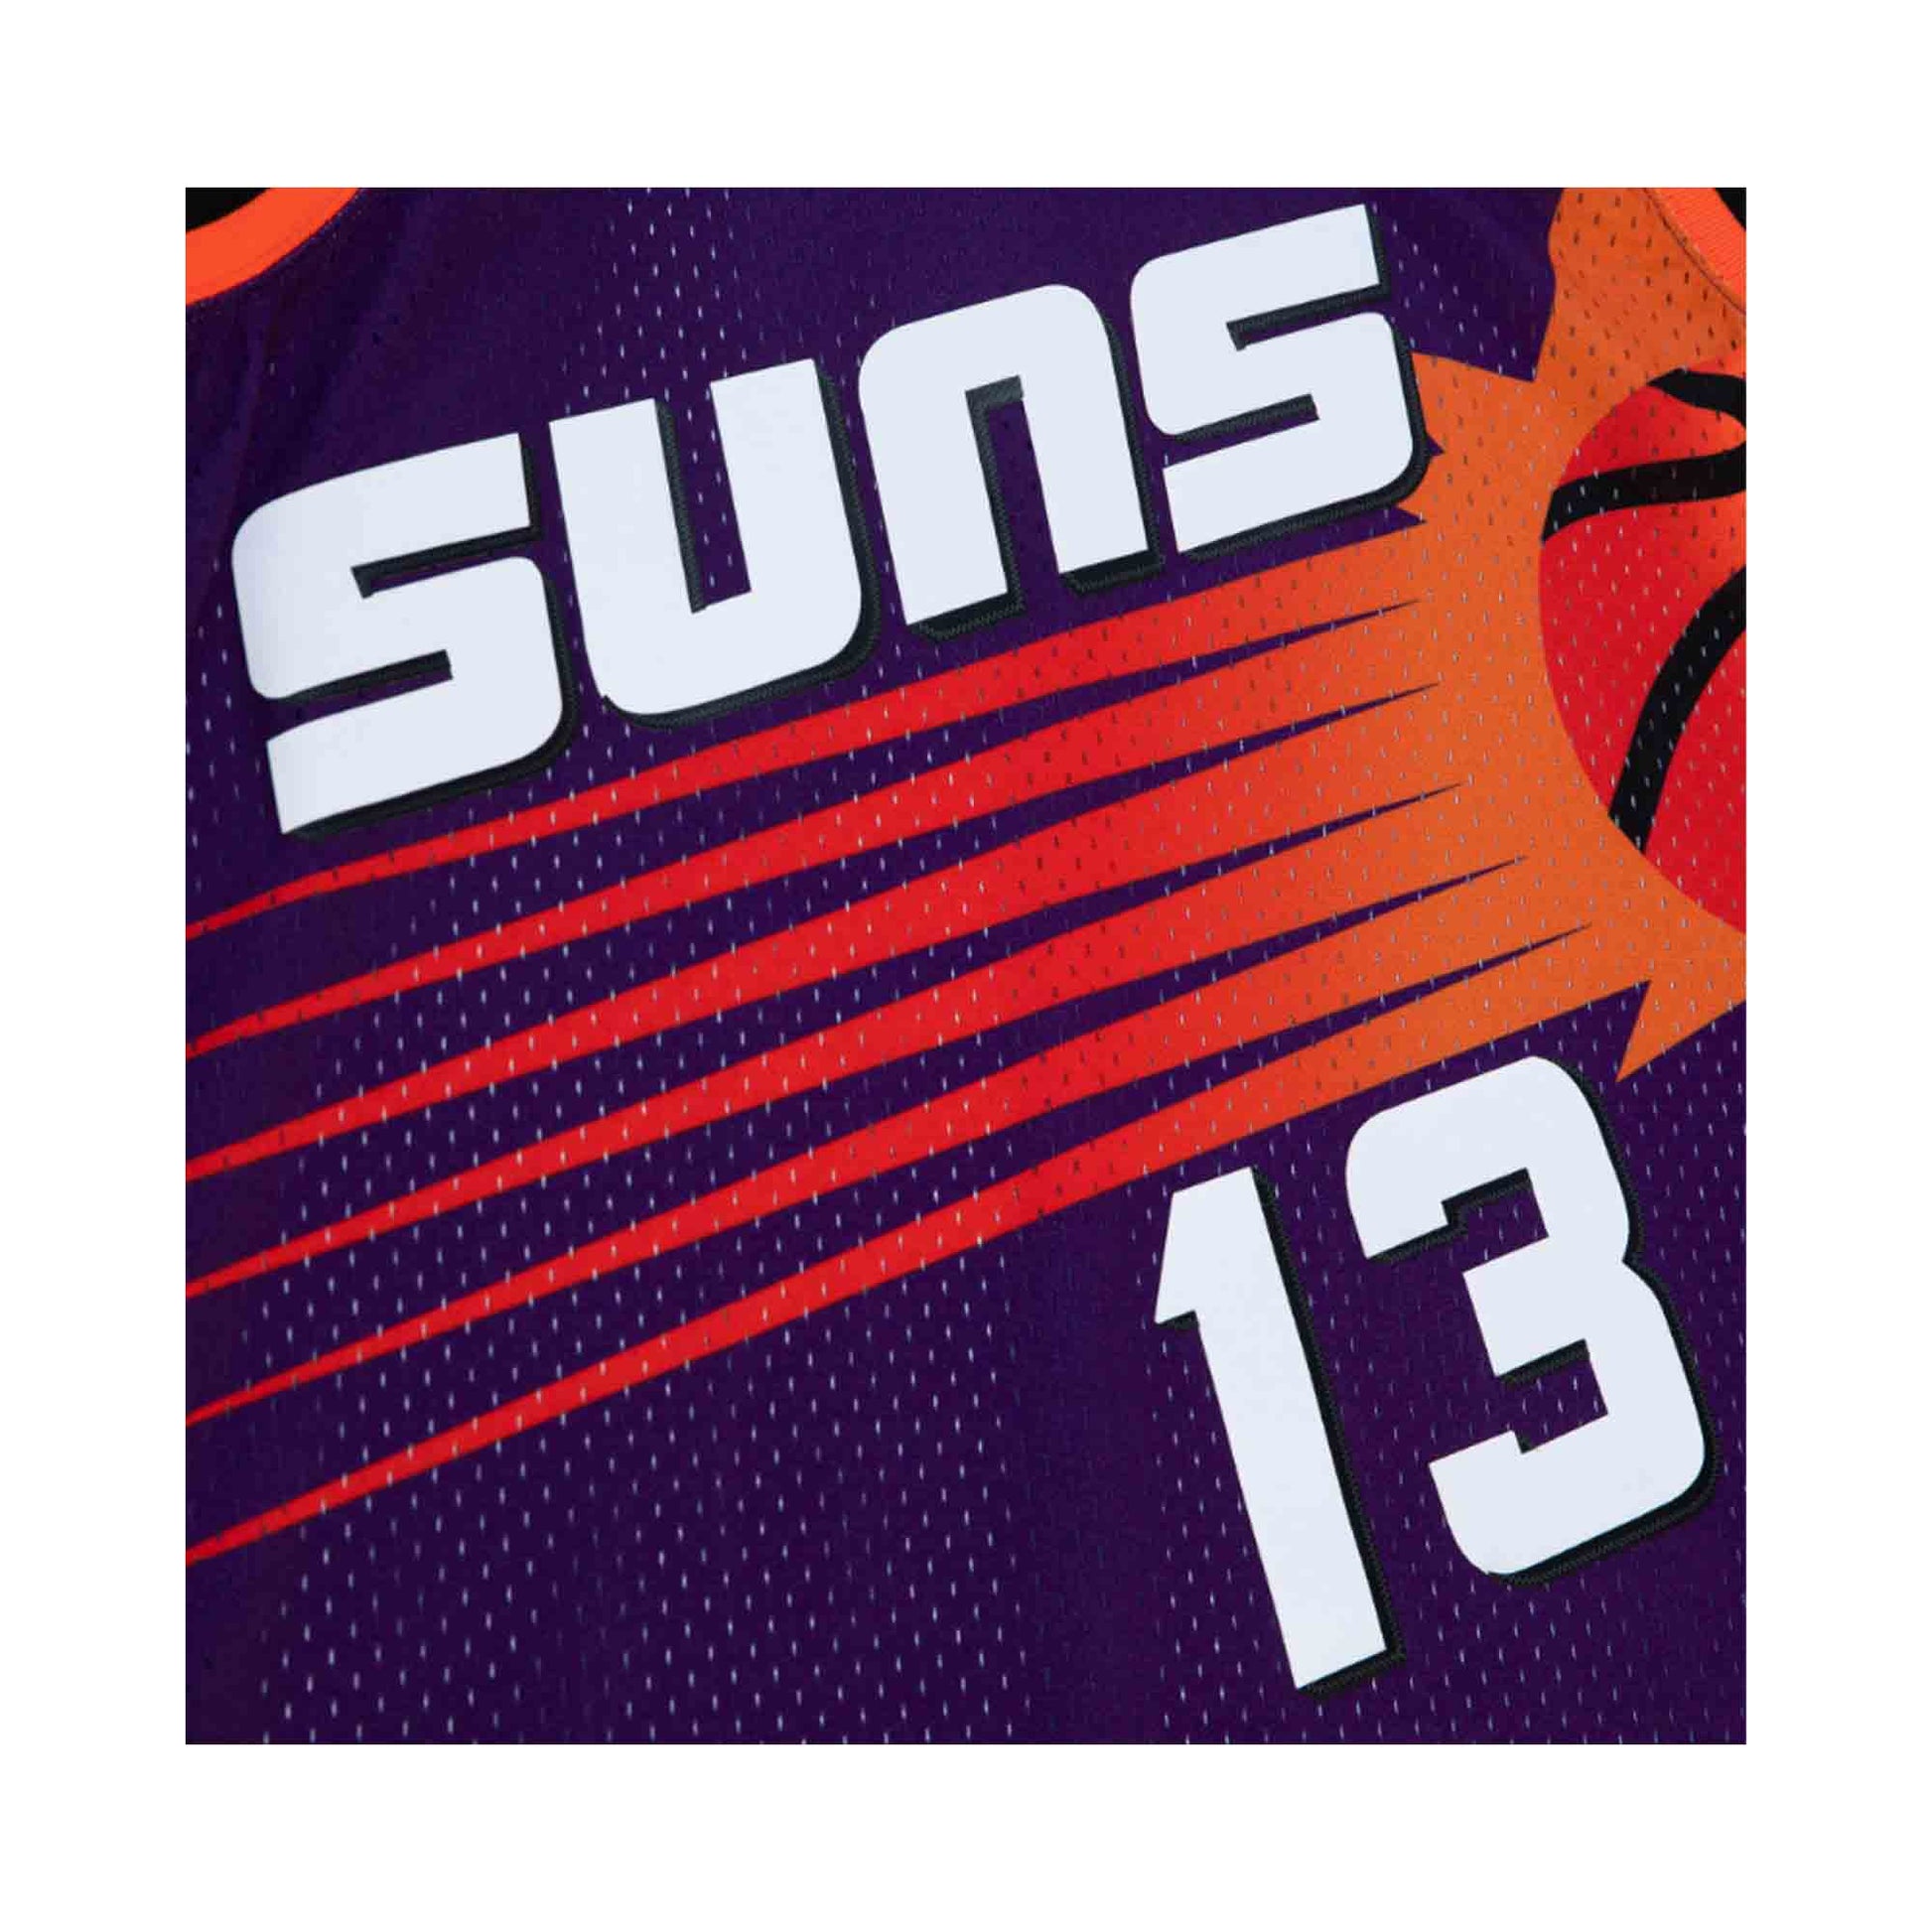 Steve Nash Phoenix Suns 13 Jersey – Nonstop Jersey